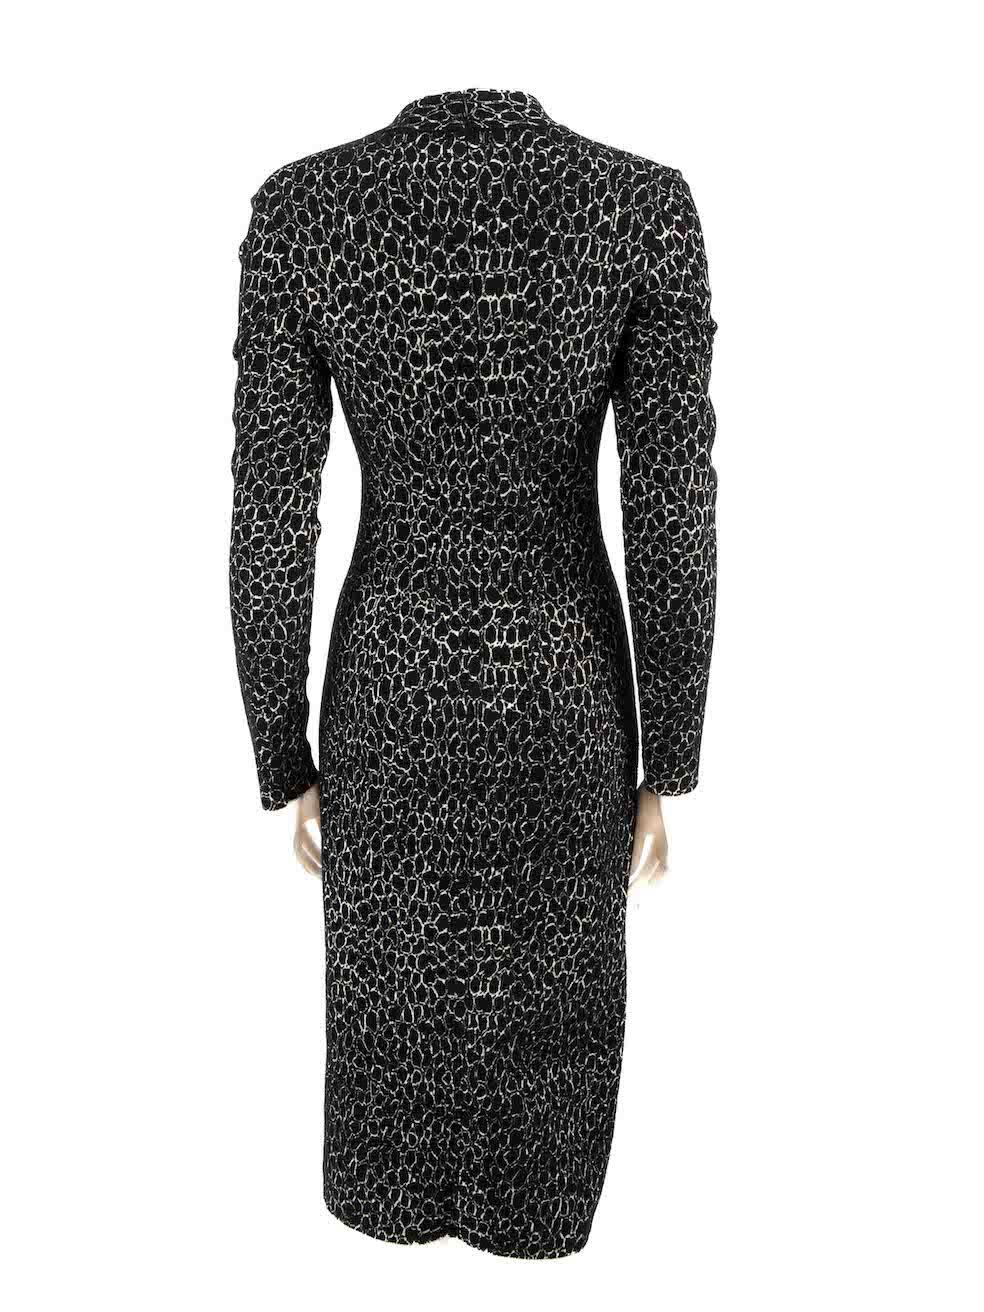 Alaïa Black Knit Patterned V-Neck Midi Dress Size L In Excellent Condition For Sale In London, GB